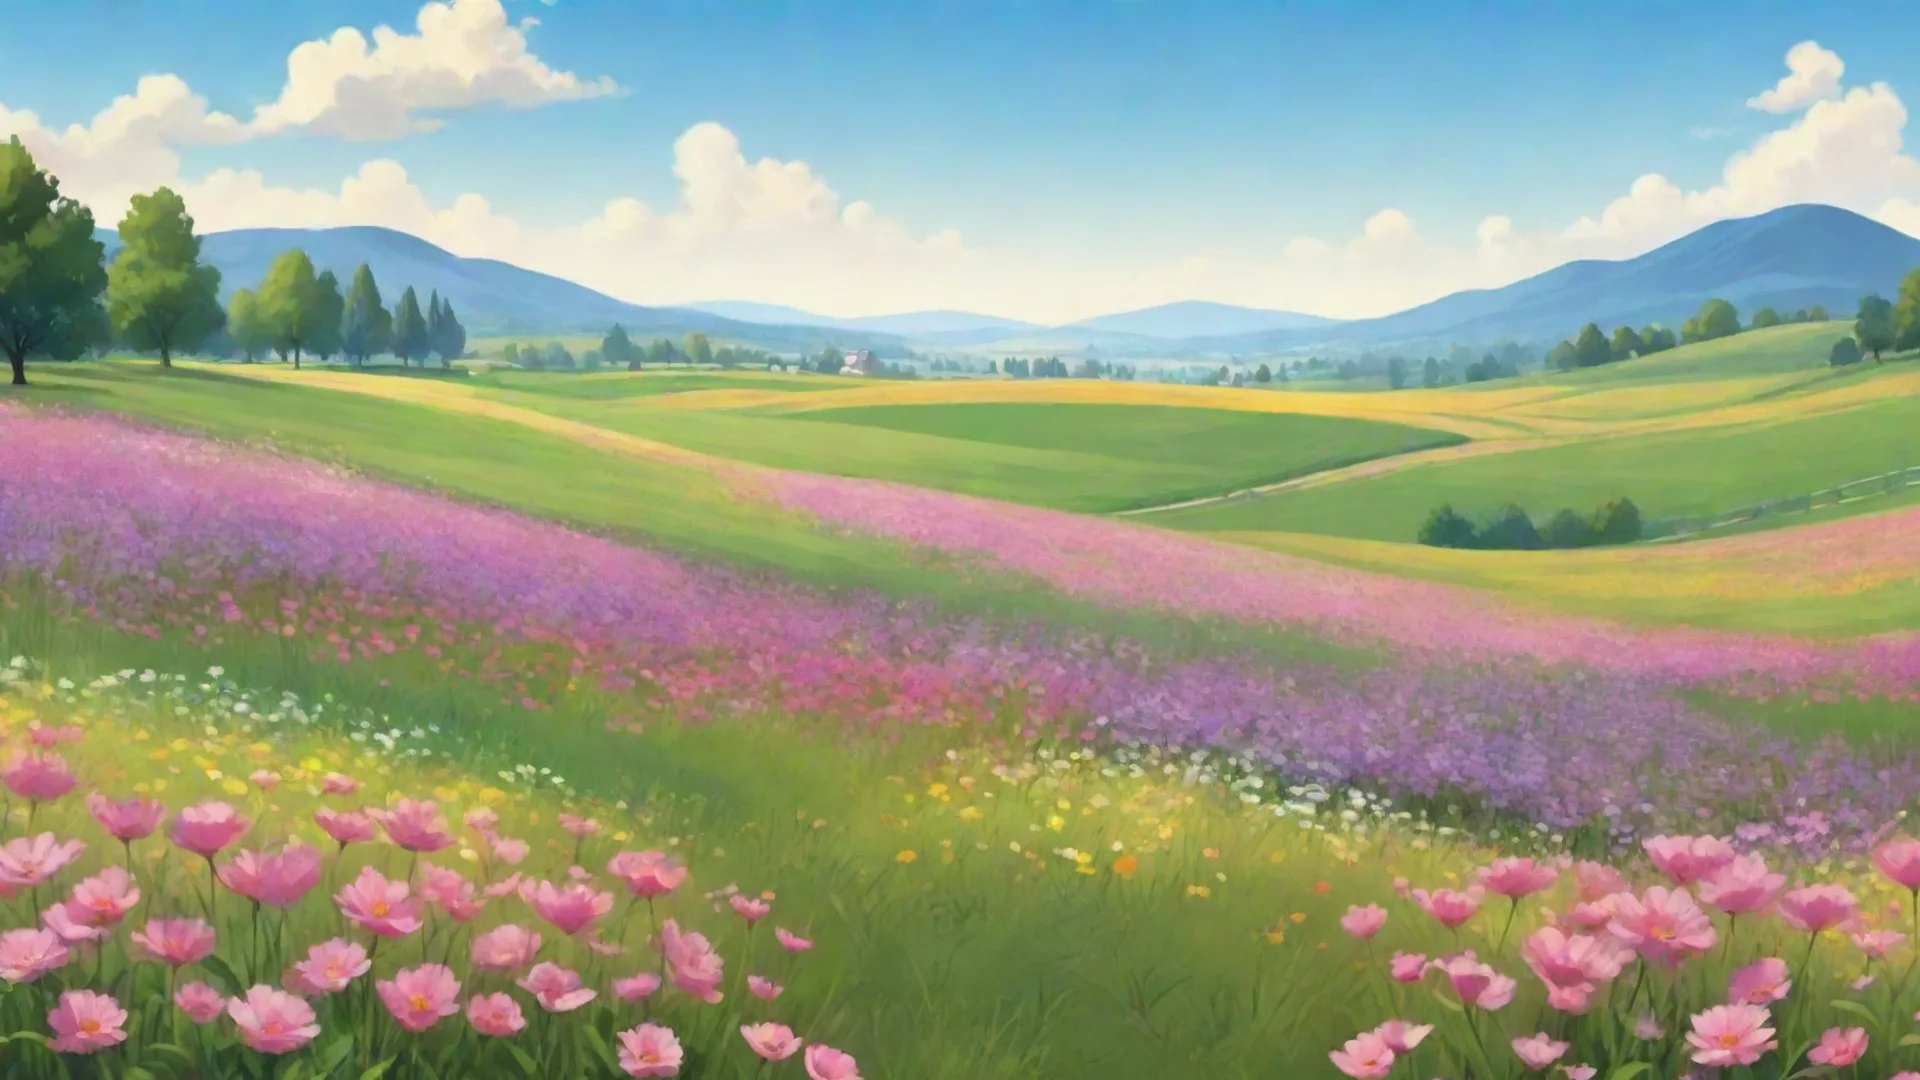 trending background sweeping landscape fields of flowers peaceful relaxing cartoon realisism hd good looking fantastic 1 wide